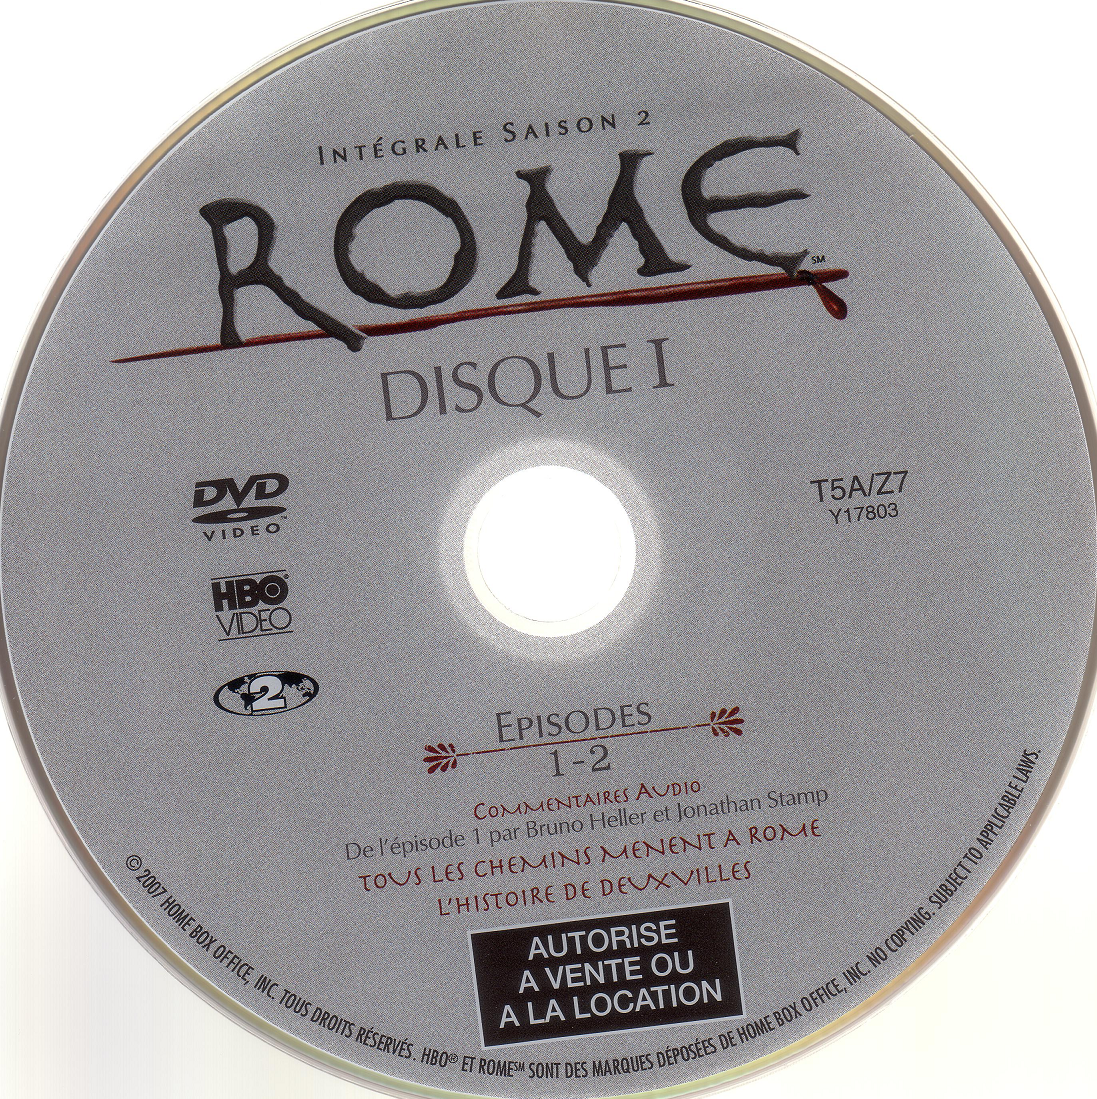 Rome saison 2 DVD 1